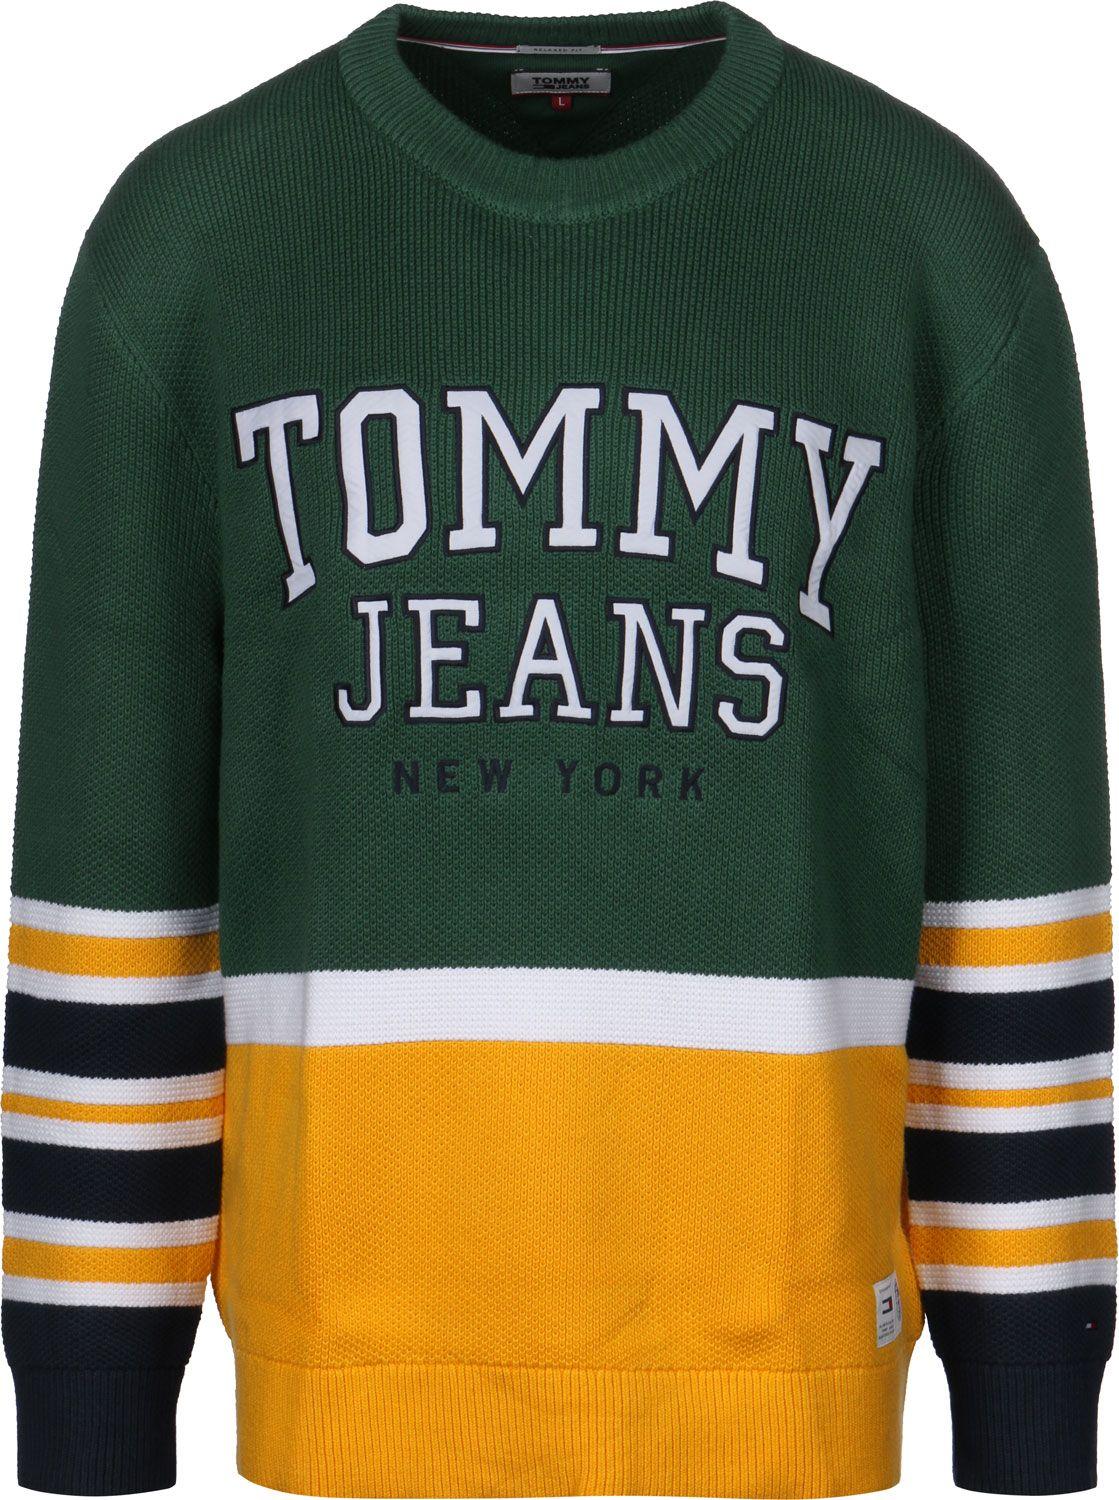 Yellow Striped Logo - Tommy Jeans Colorblock Logo sweater green yellow striped | WeAre Shop